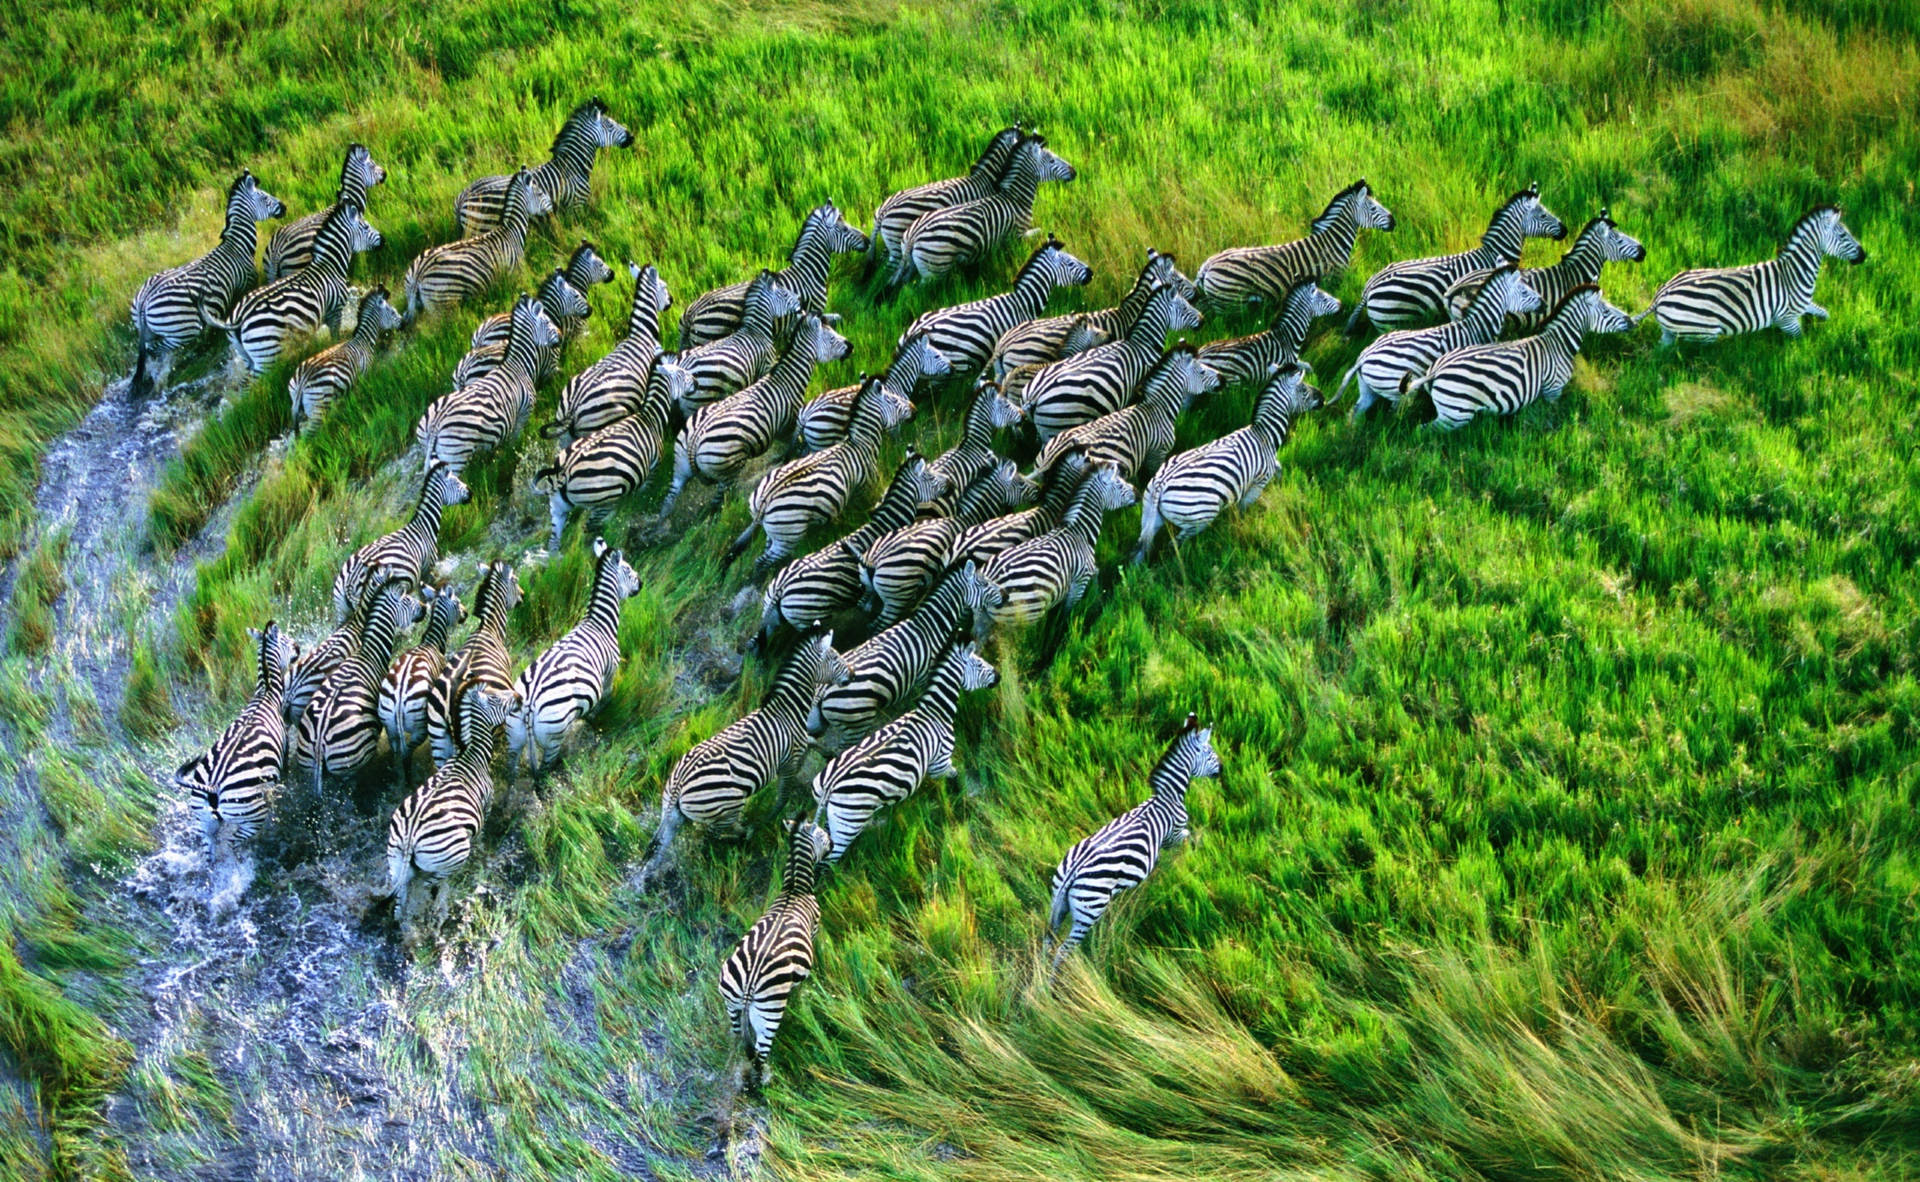 A Herd Of Zebras Running On Grassland